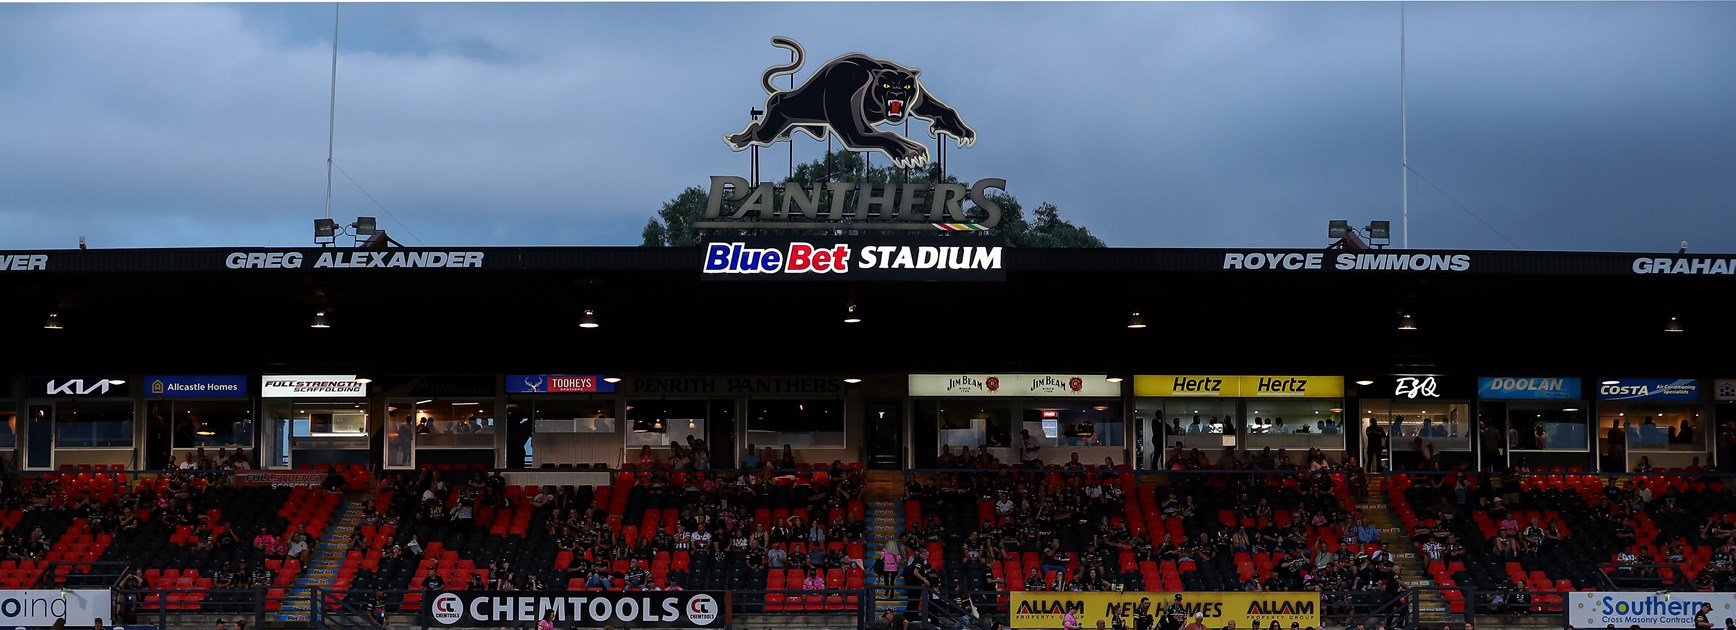 NRL statement on BlueBet Stadium incident